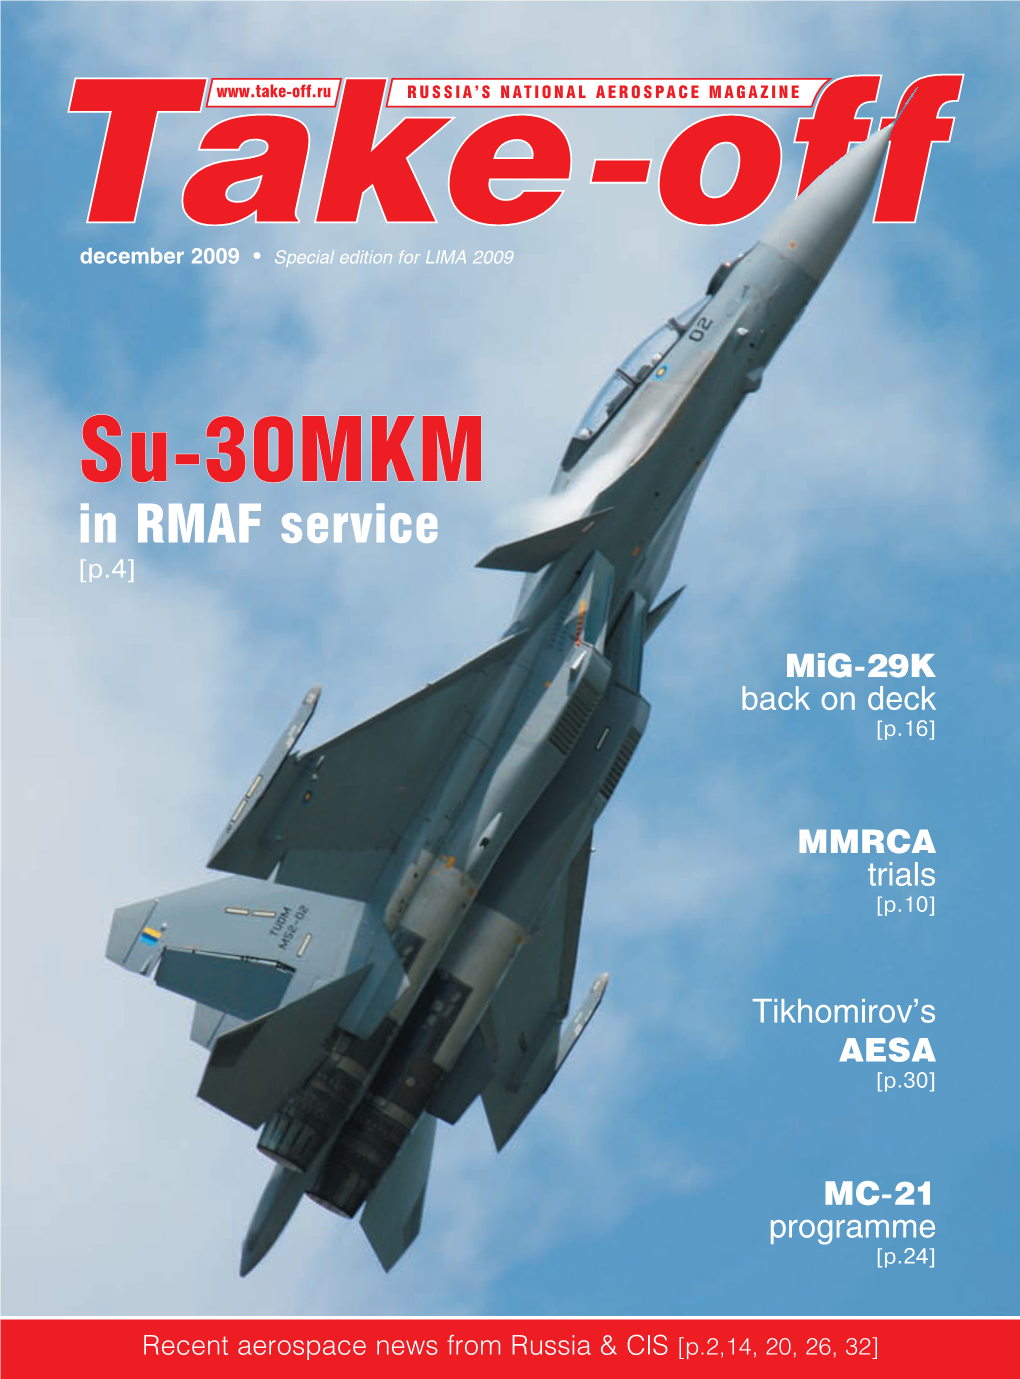 Su-30MKM Reliable Partner!” in RMAF Service [P.4]